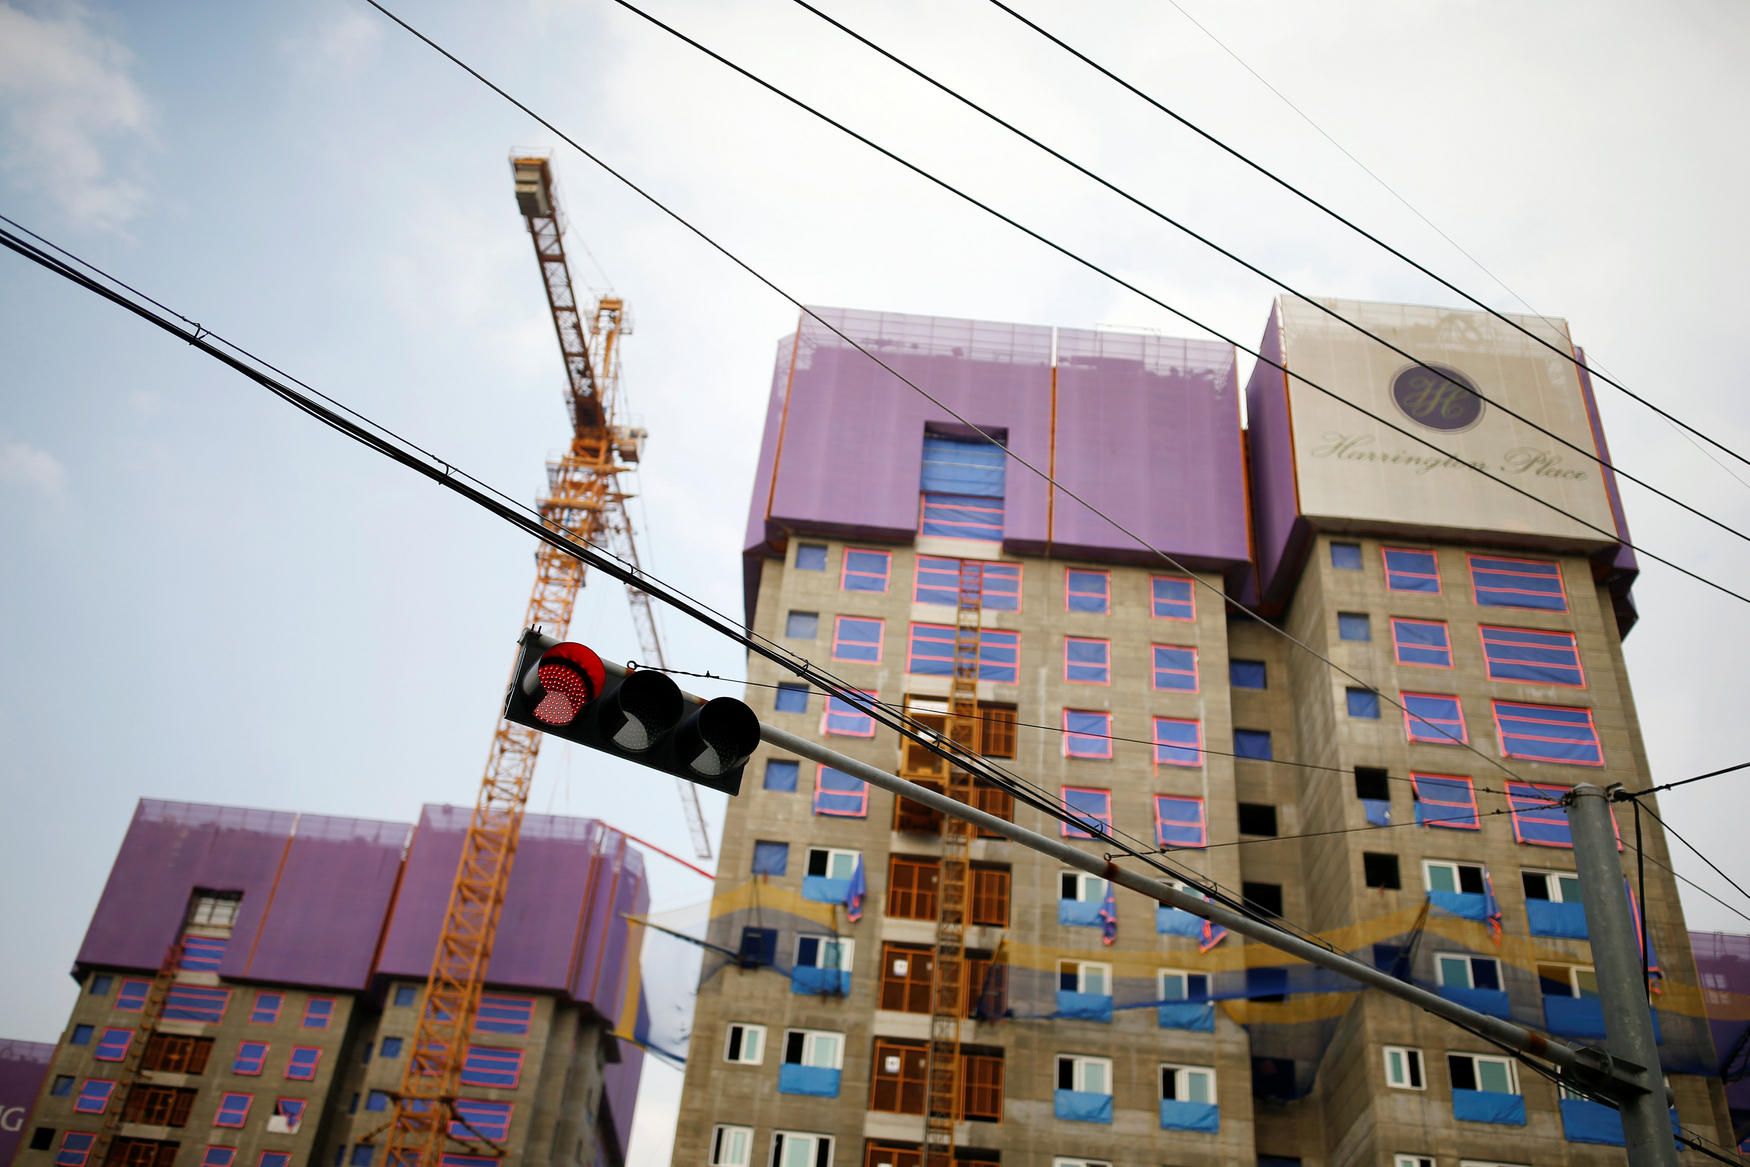 After building boom, South Korea girds for housing glut